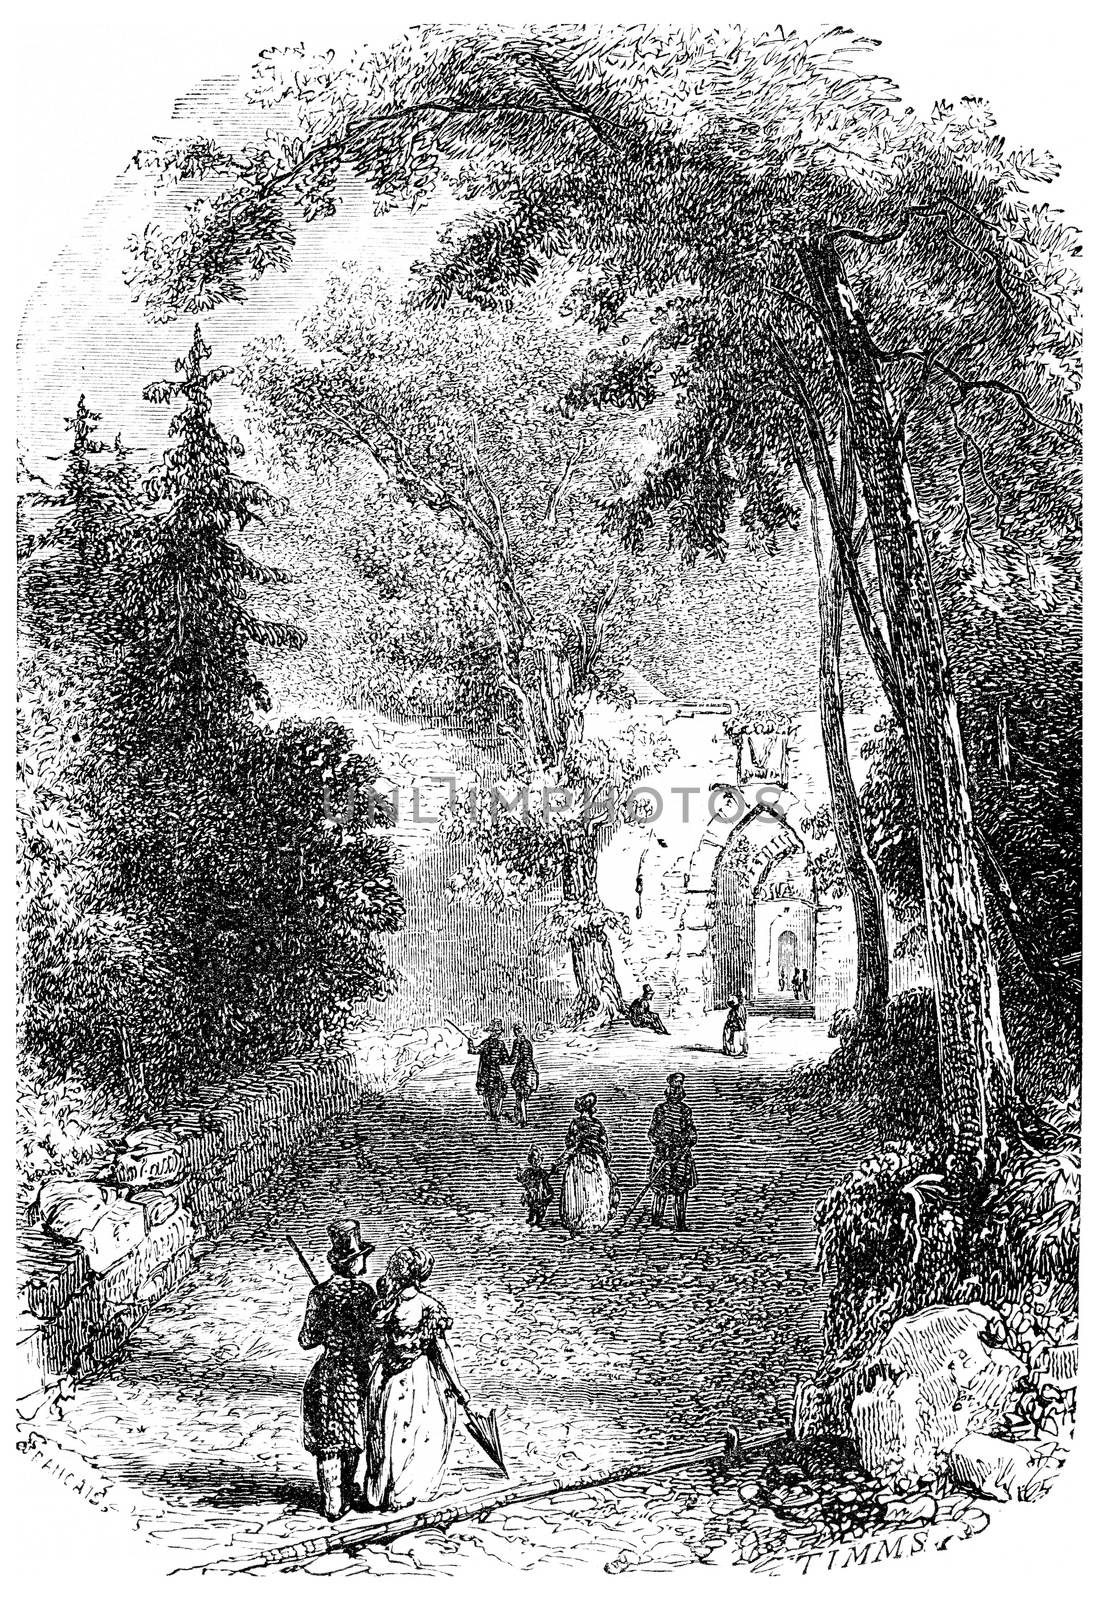 Entrance of the old castle, Baden, vintage engraved illustration. From Chemin des Ecoliers, 1861.
